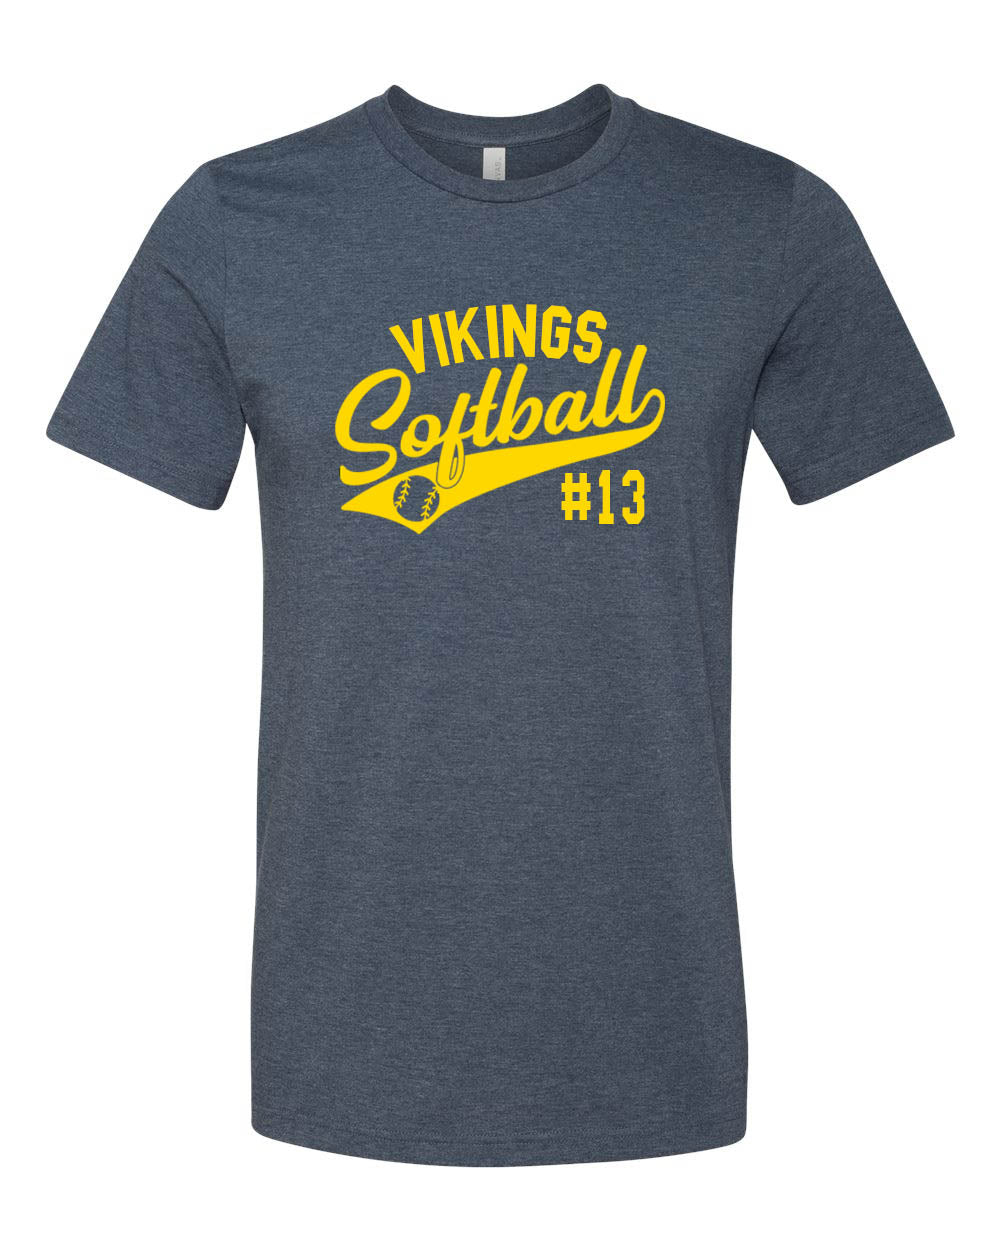 Vikings Softball t-Shirt